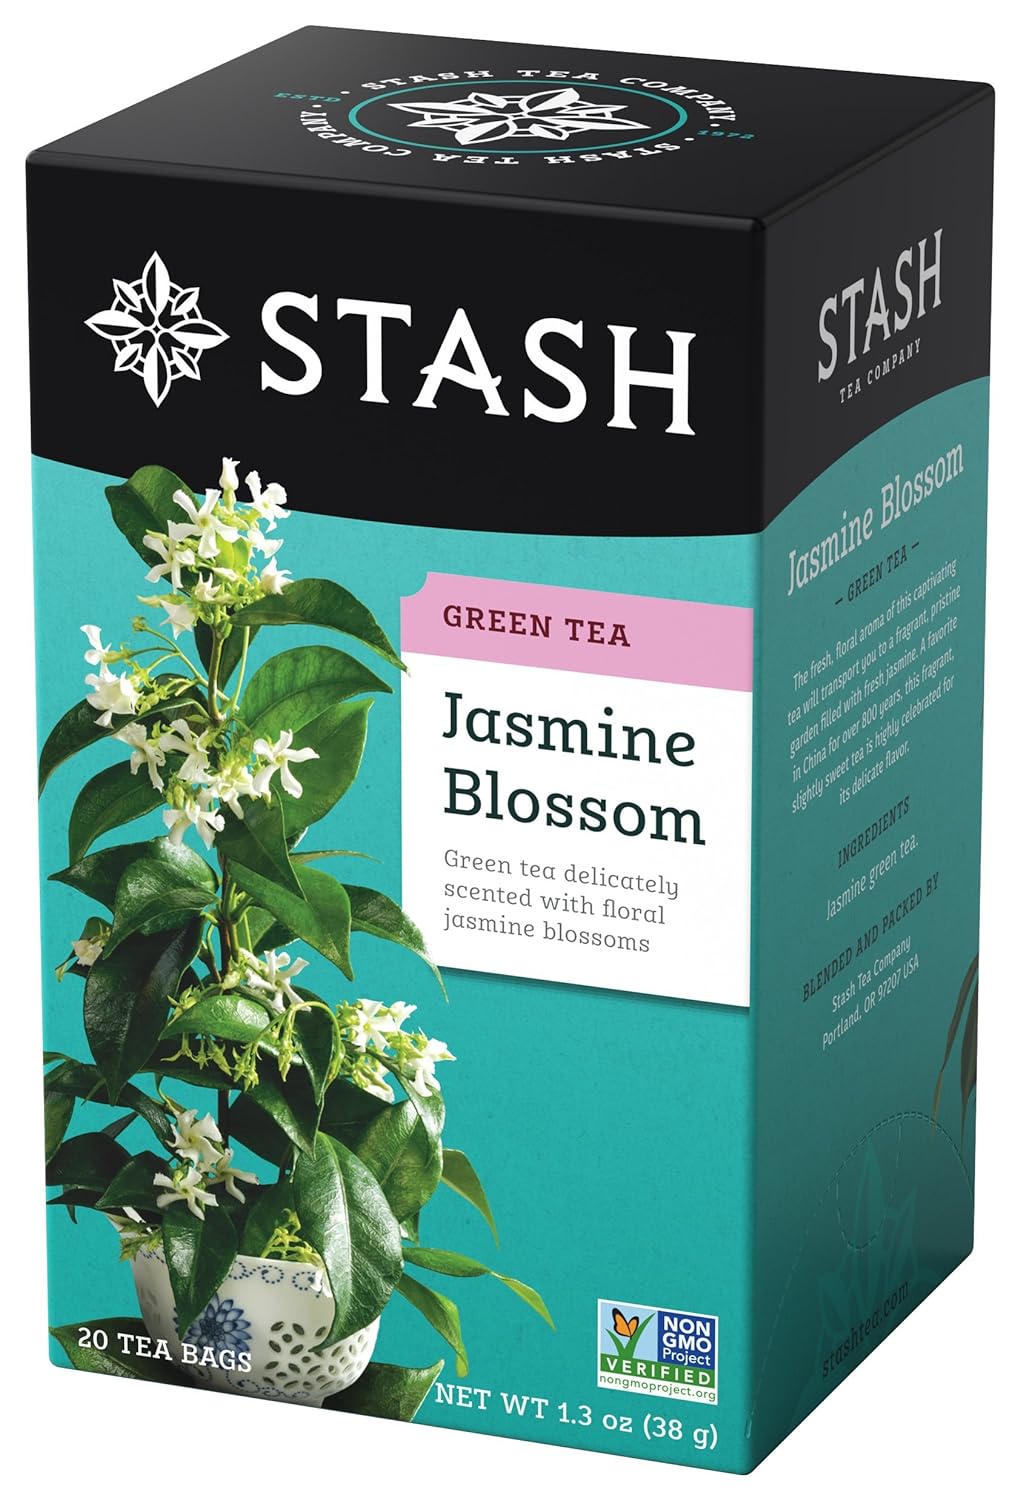 Stash Tea Jasmine Blossom Green Tea